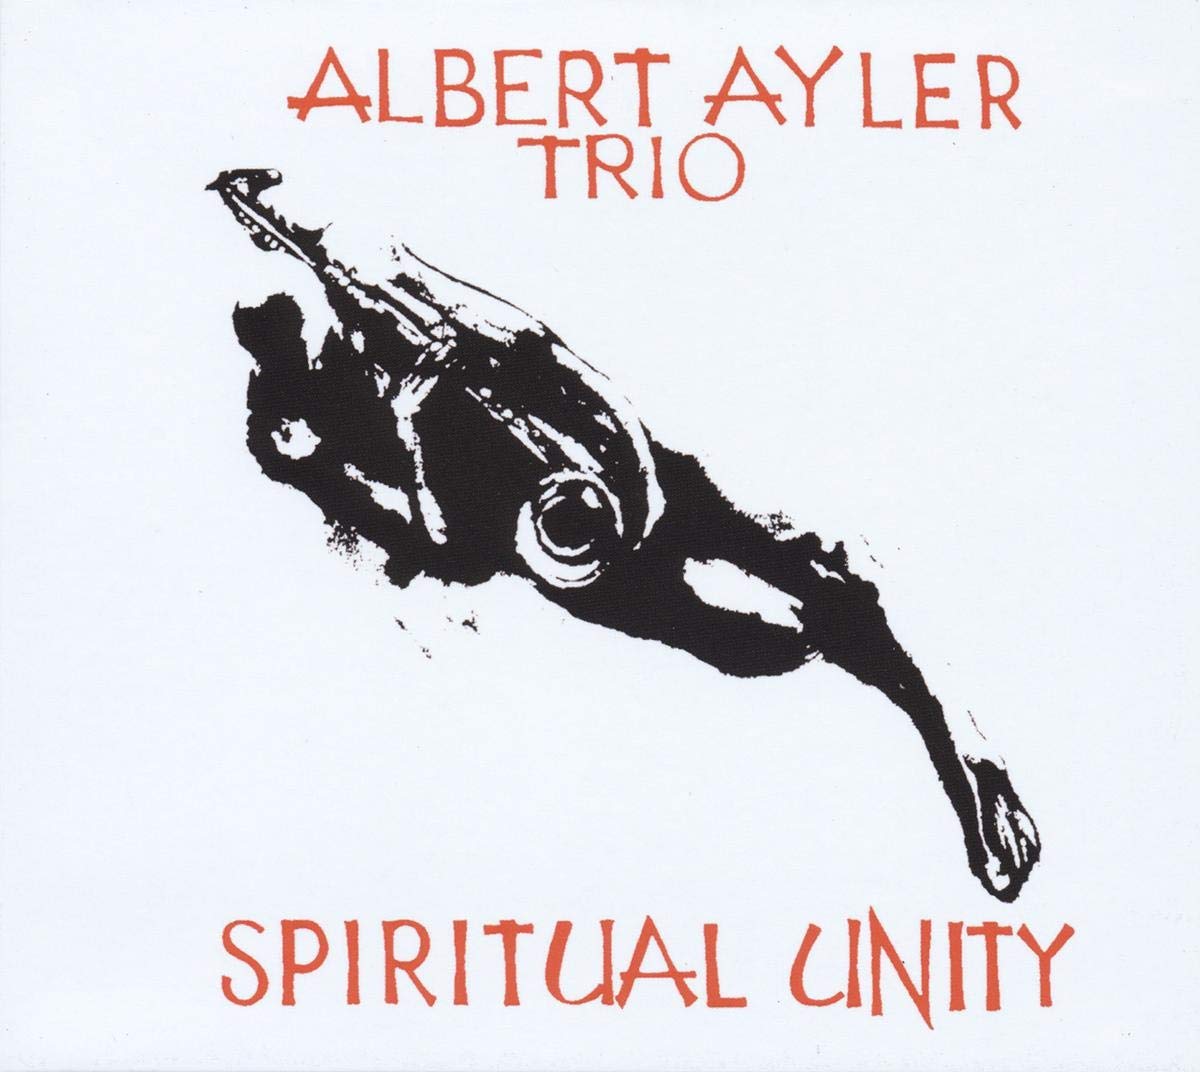 ALBERT AYLER TRIO - SPIRITUAL UNITY Vinyl LP